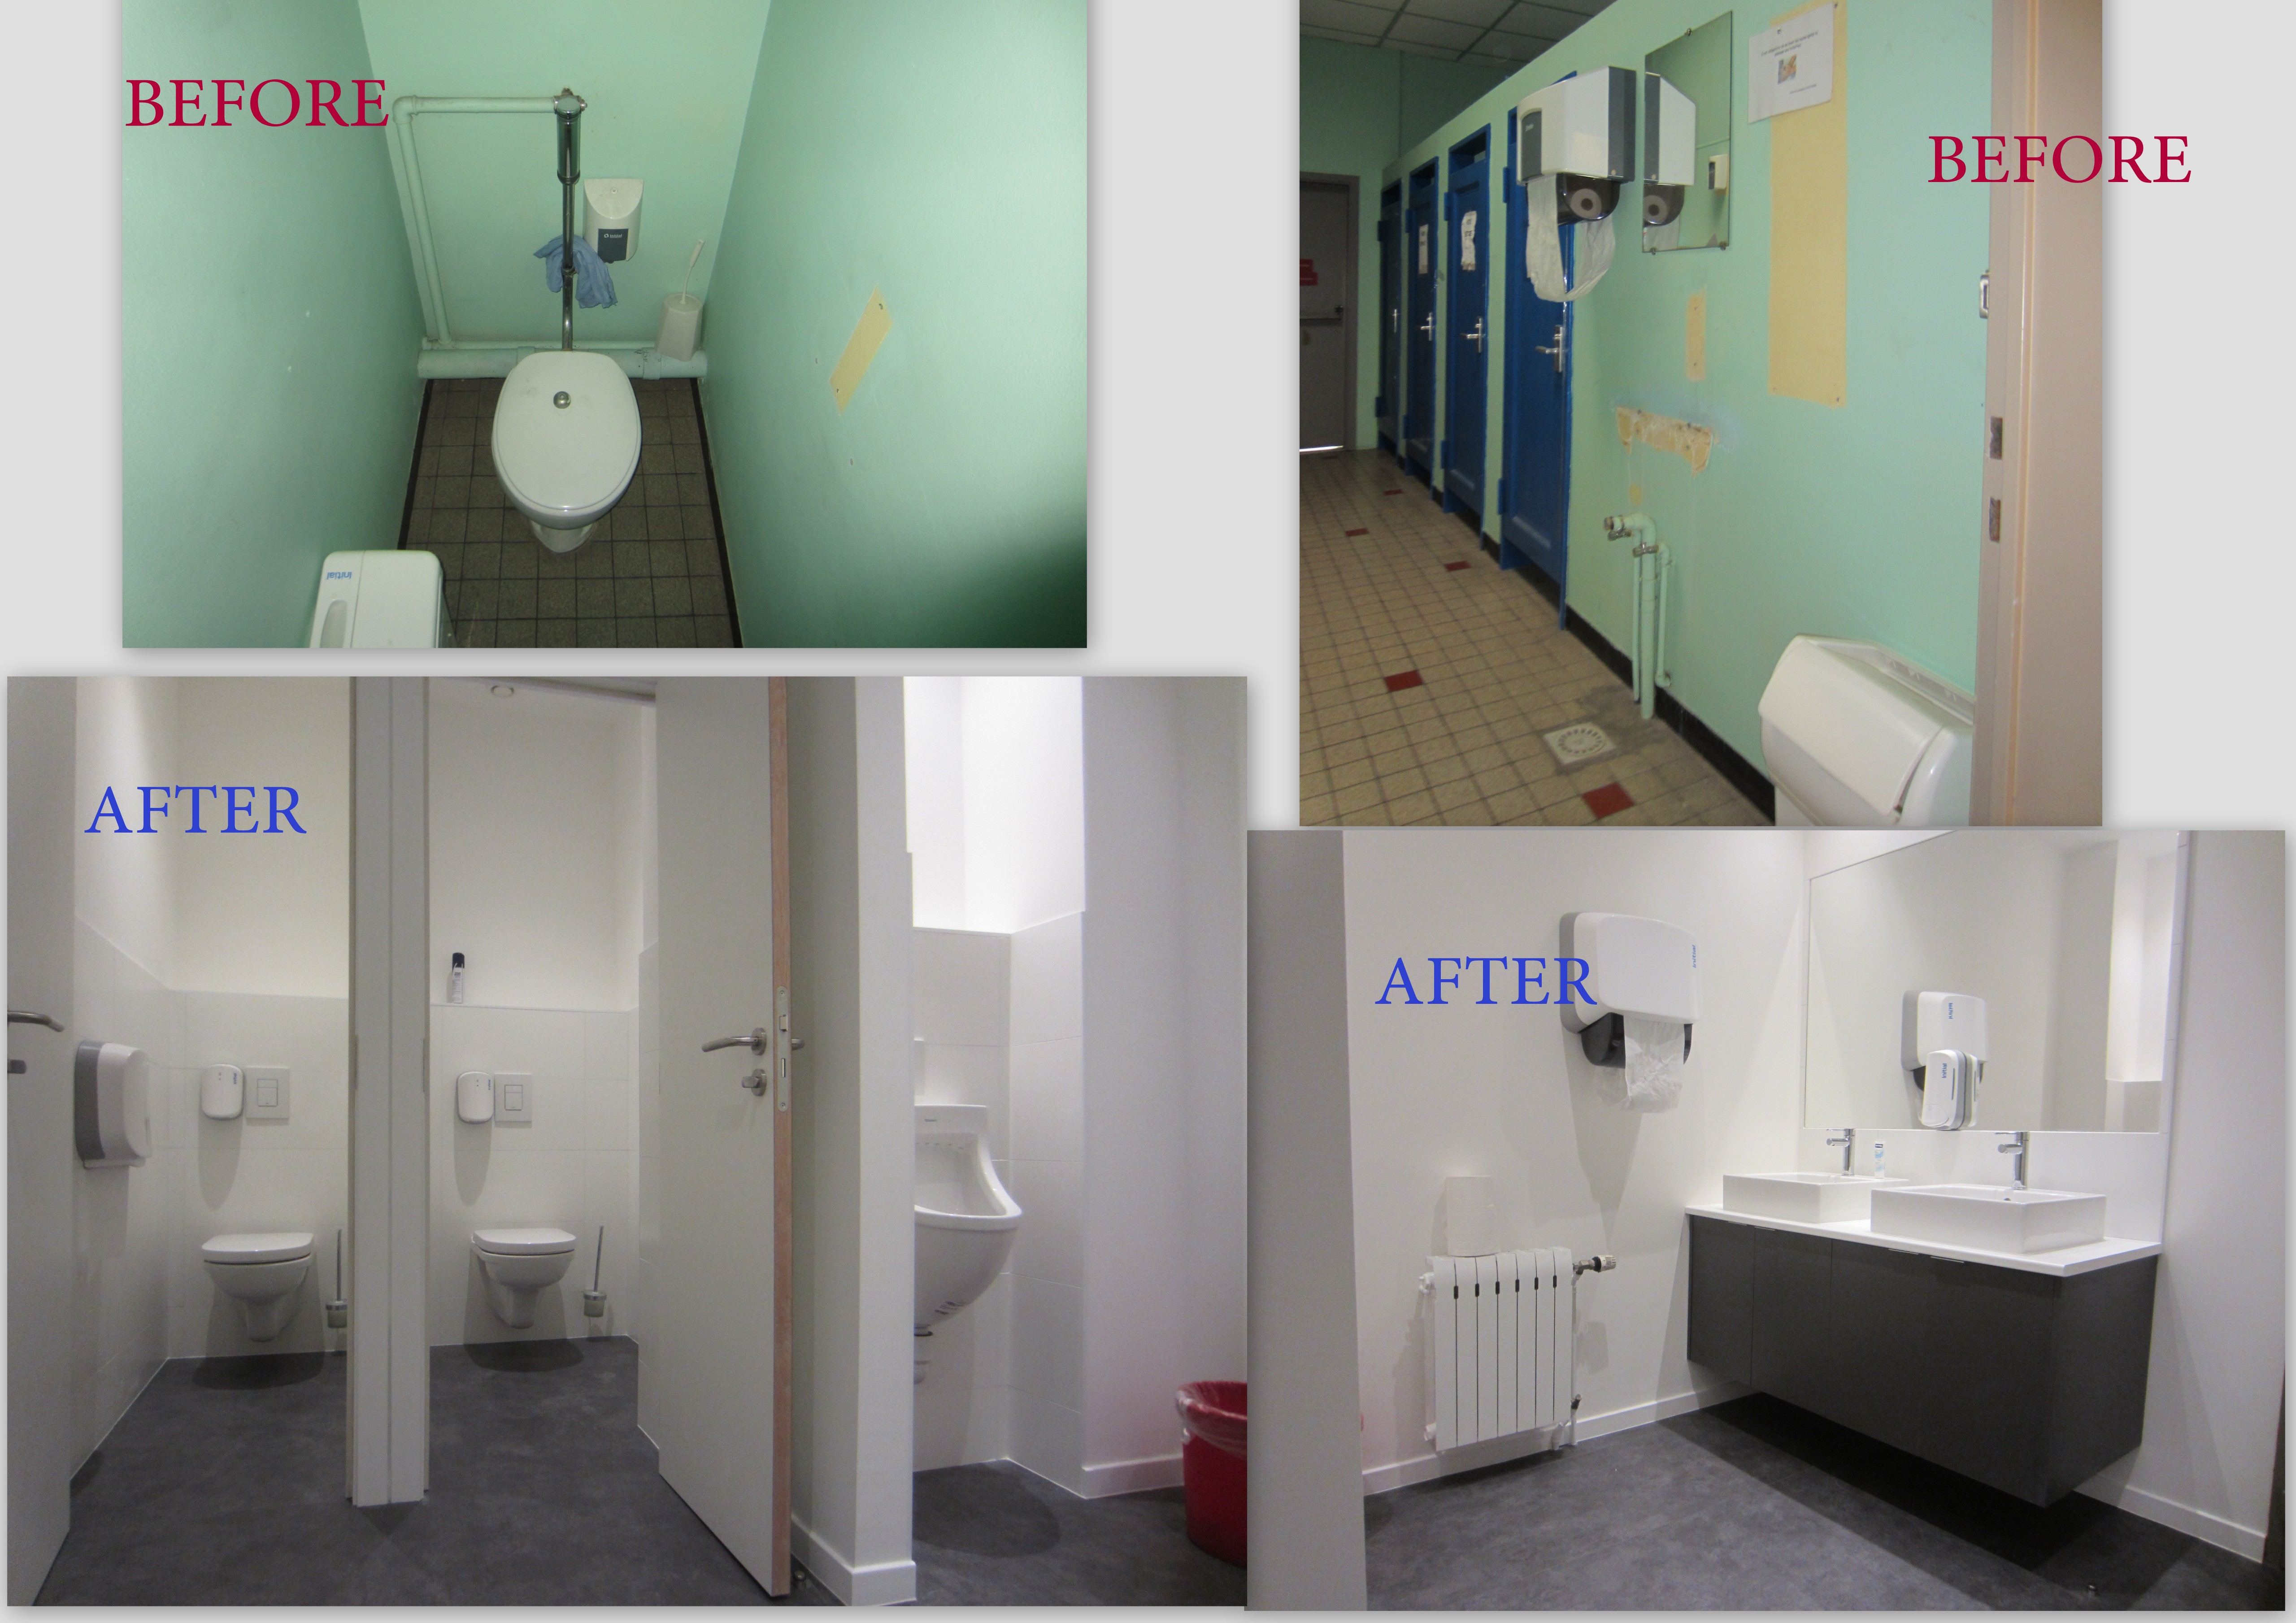 Modernization of sanitary spaces